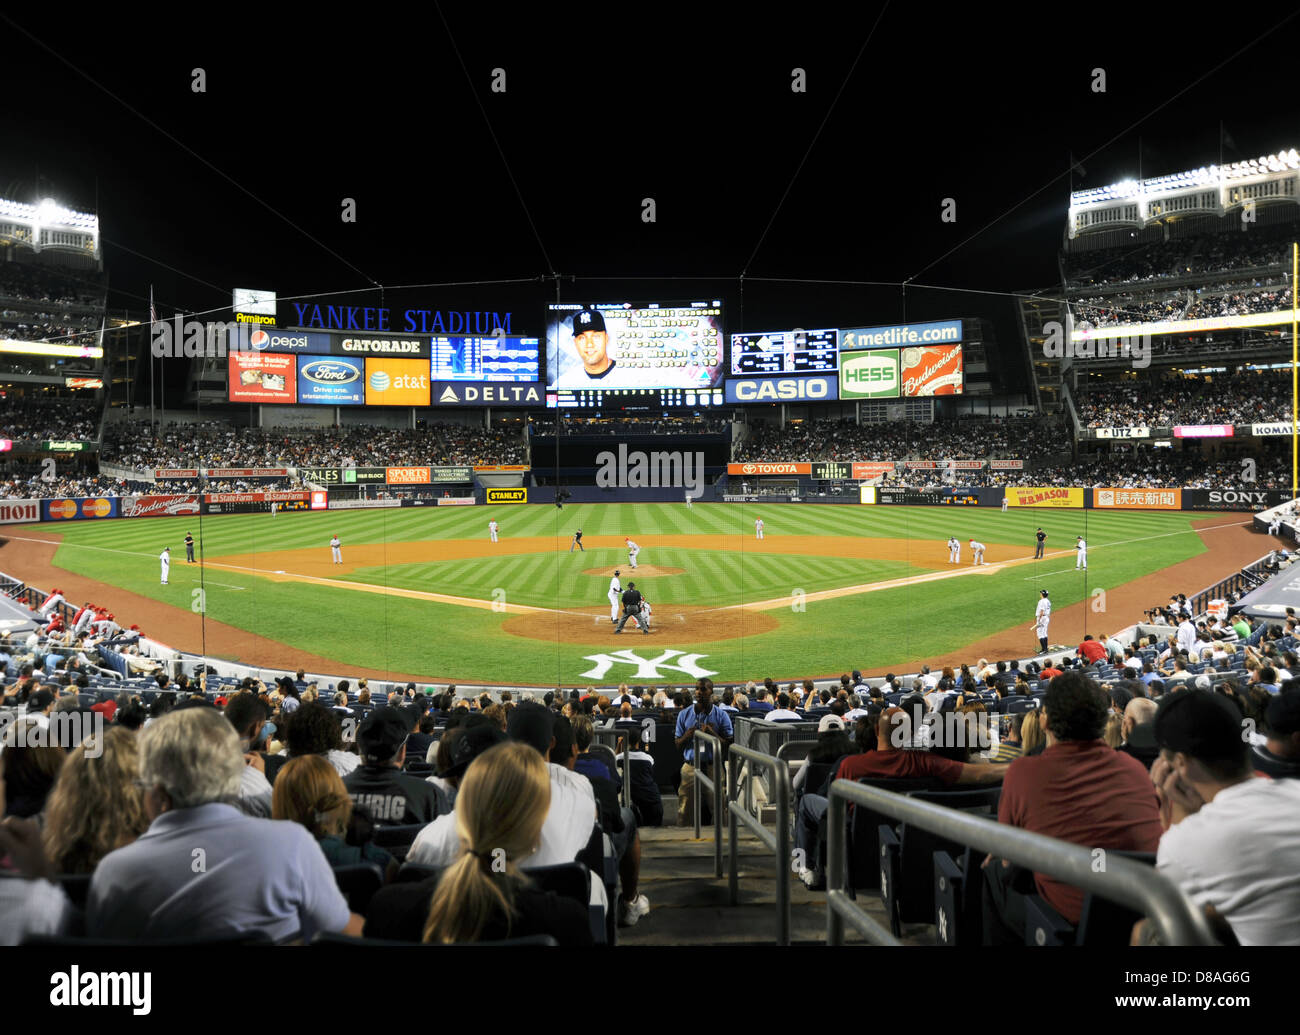 Yankee Stadium - Populous